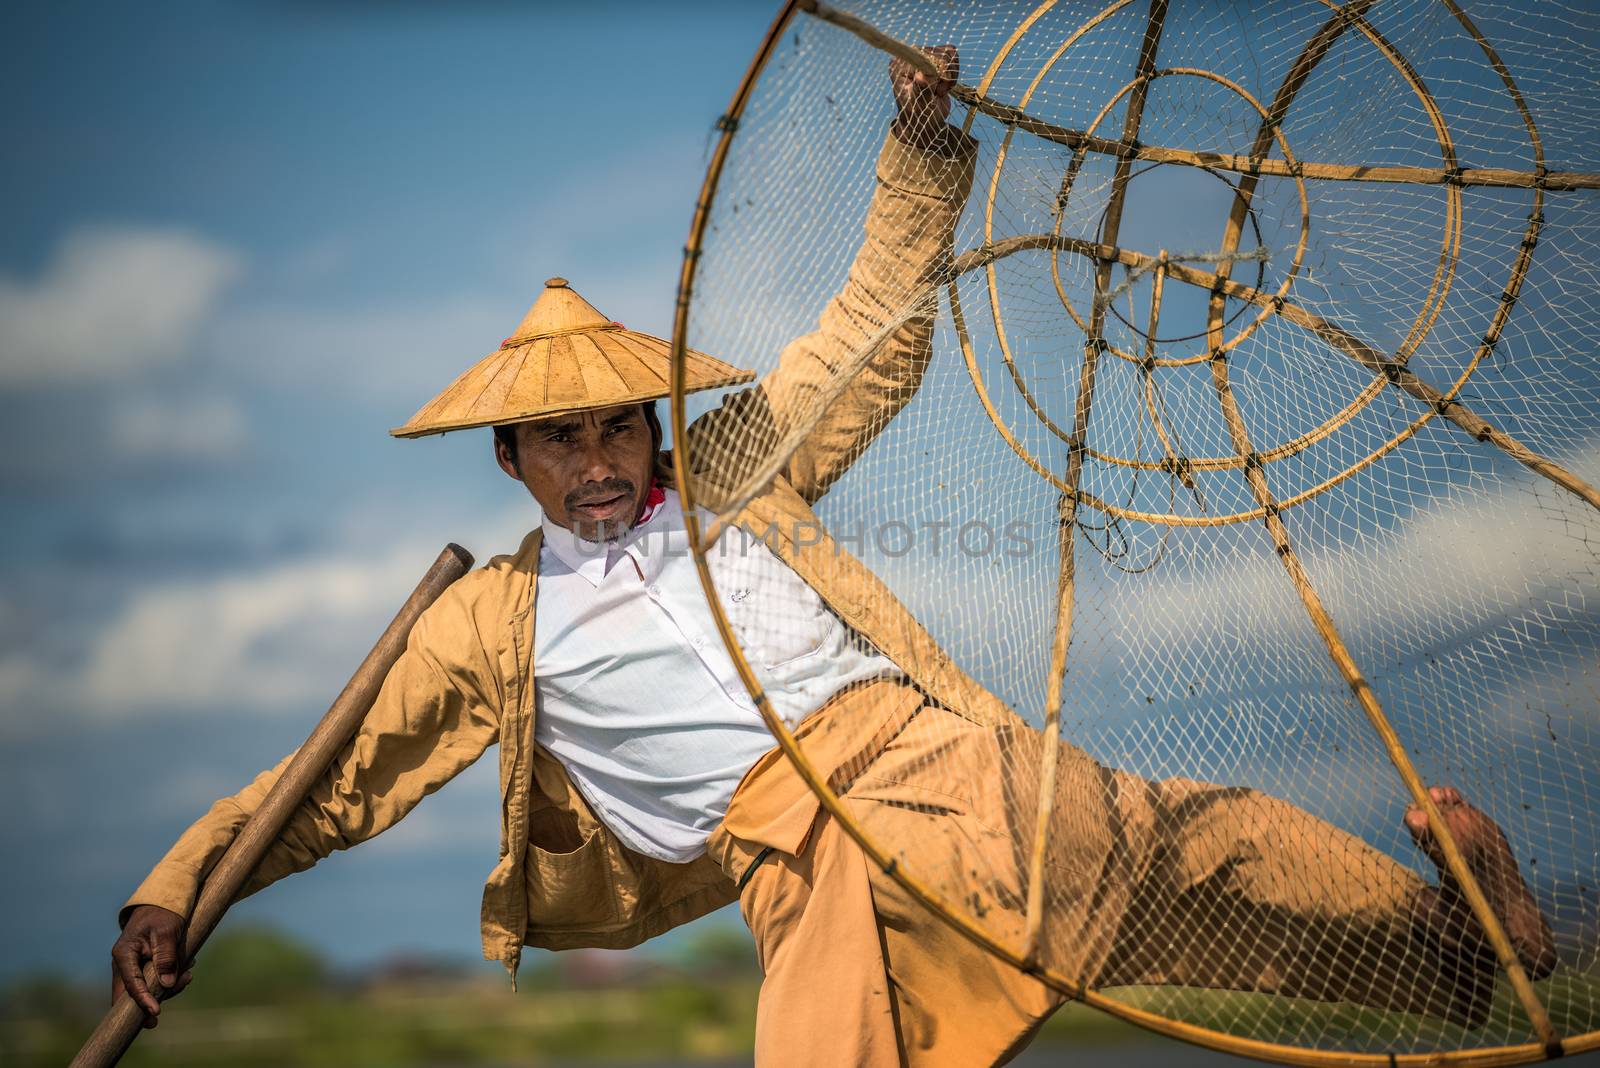 Burmese fisherman on a traditional bamboo boat using a handmade net by nickfox